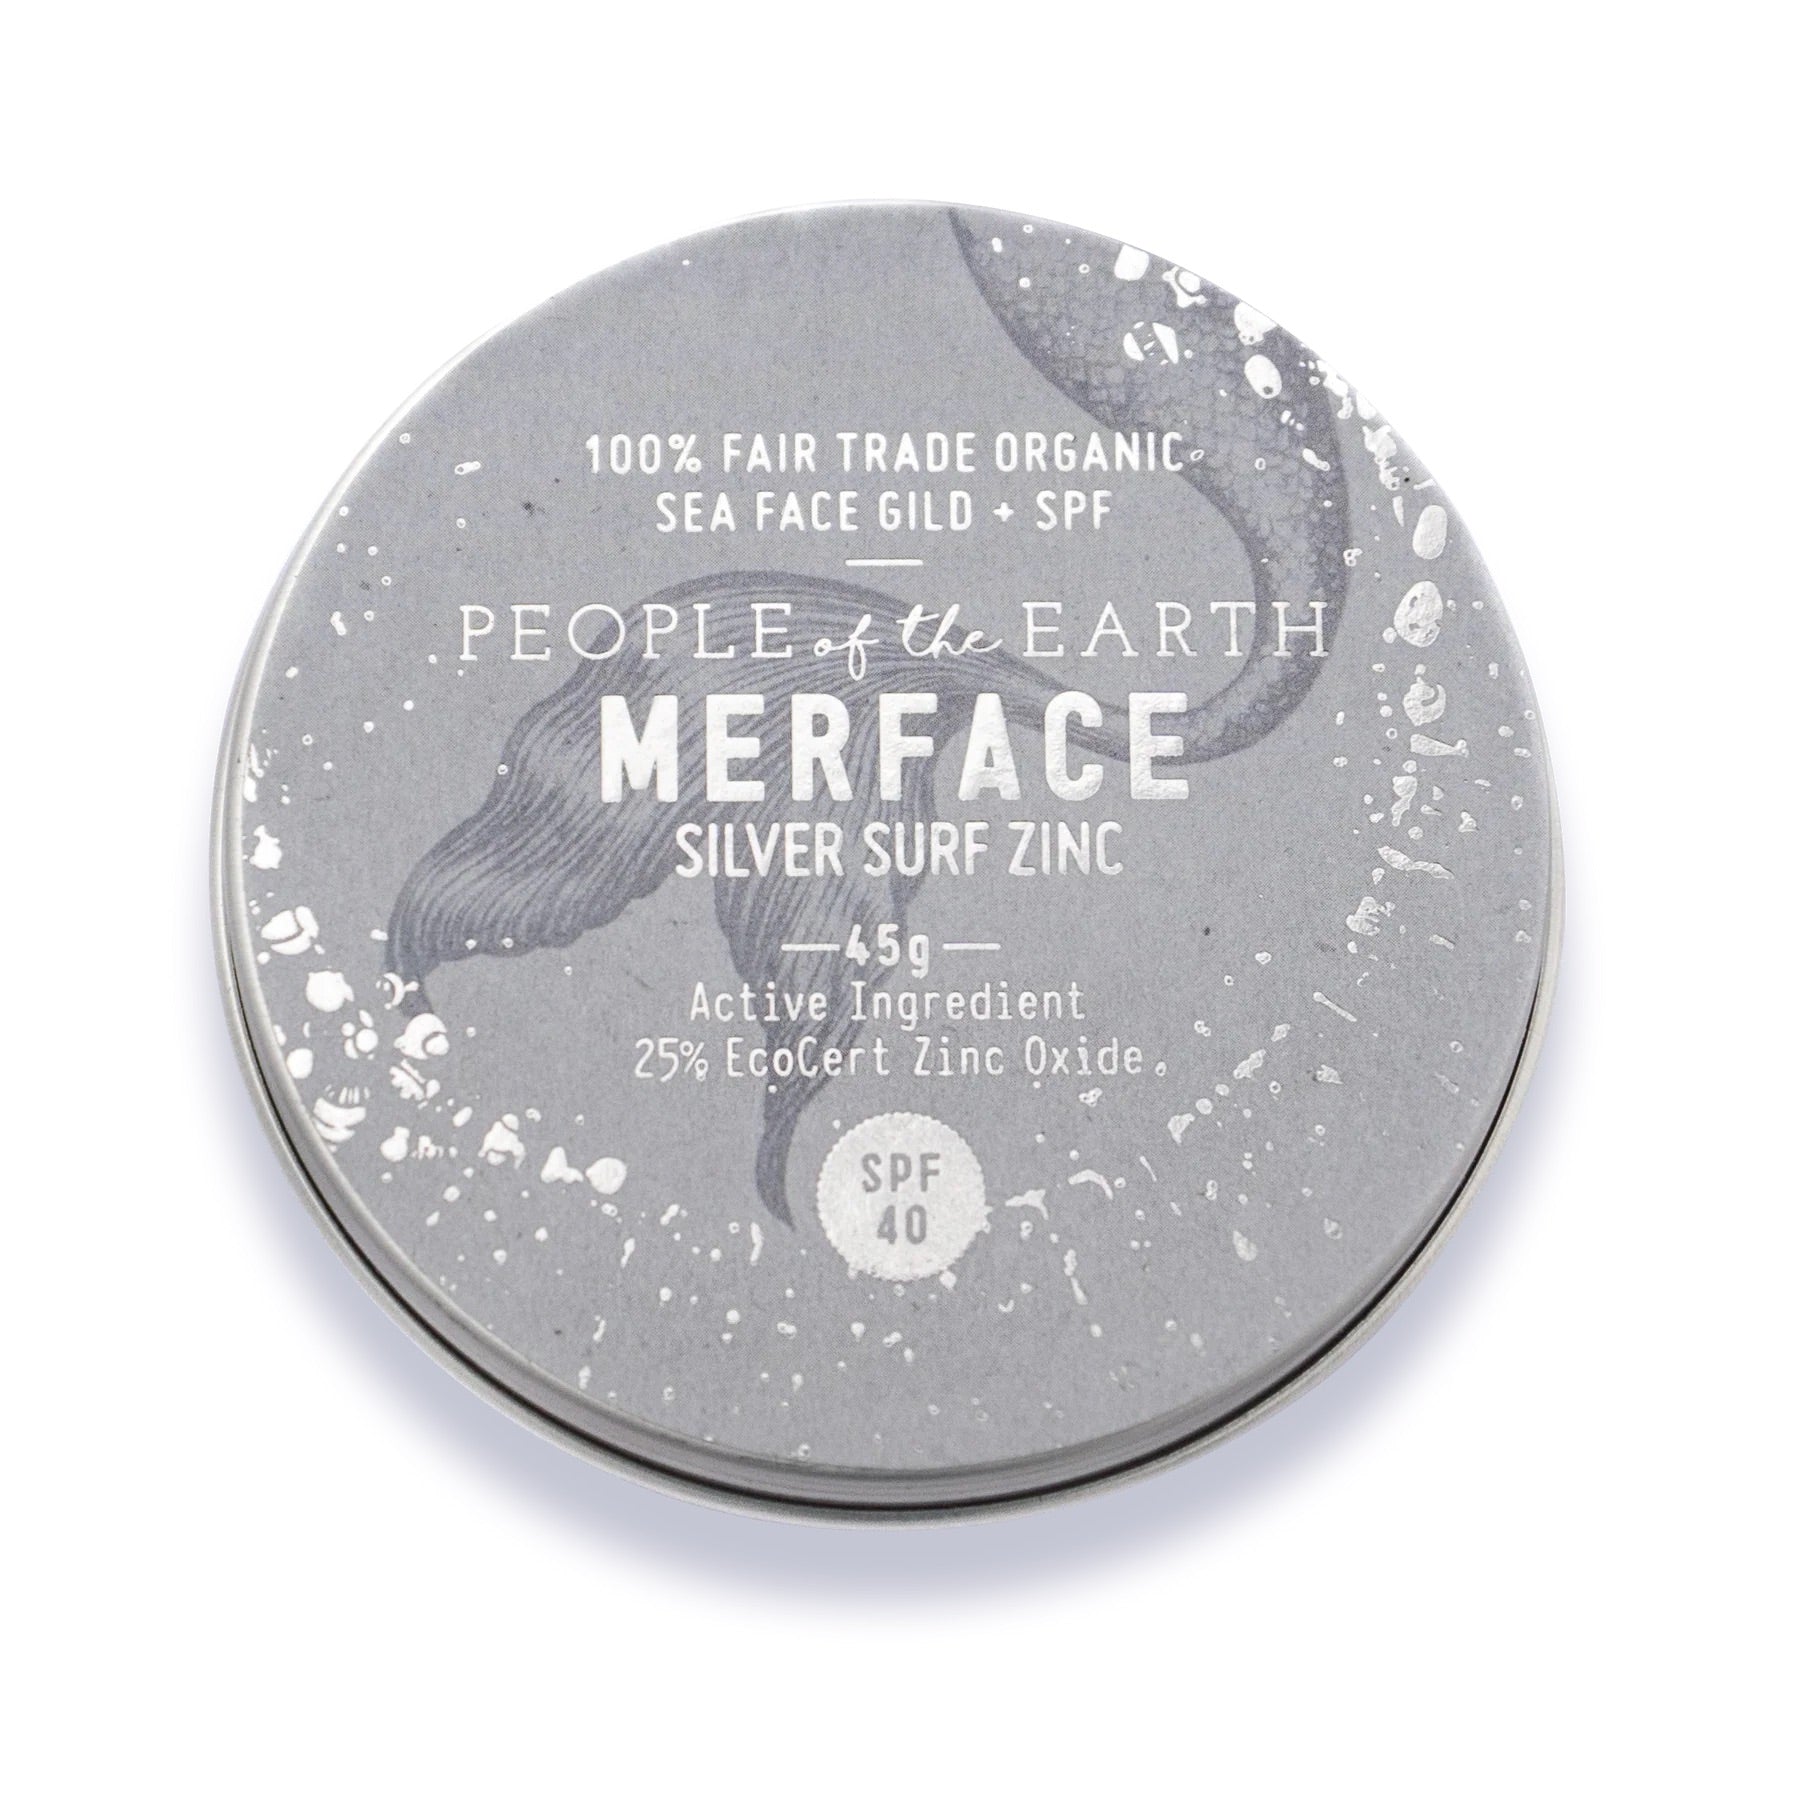 Merface Silver Surf Zinc - Sunny Bliss - Australia